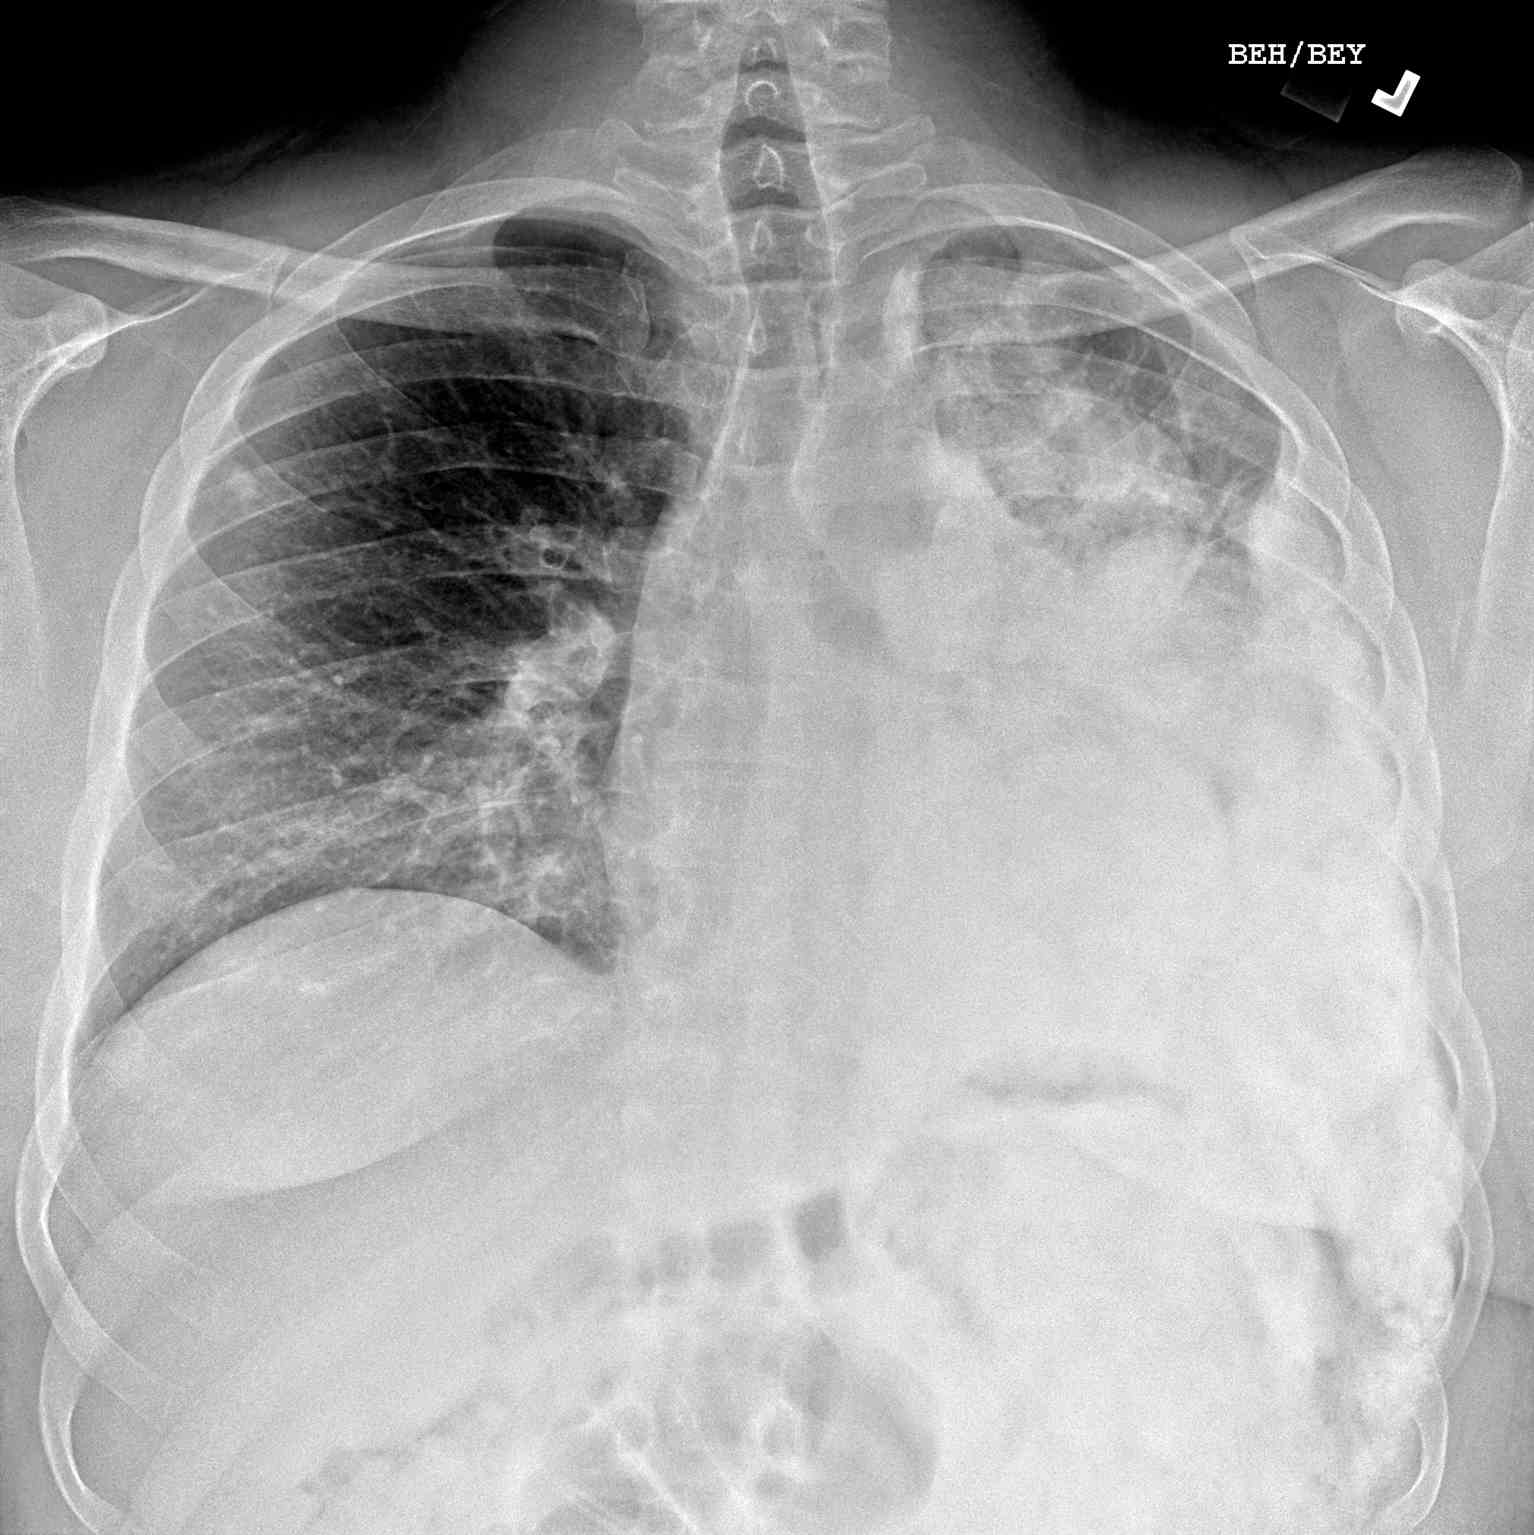 <p>Pulmonary Metastasis of Osteogenic Sarcoma. Chest x-ray demonstrating metastasis of osteosarcoma to the lung.</p>